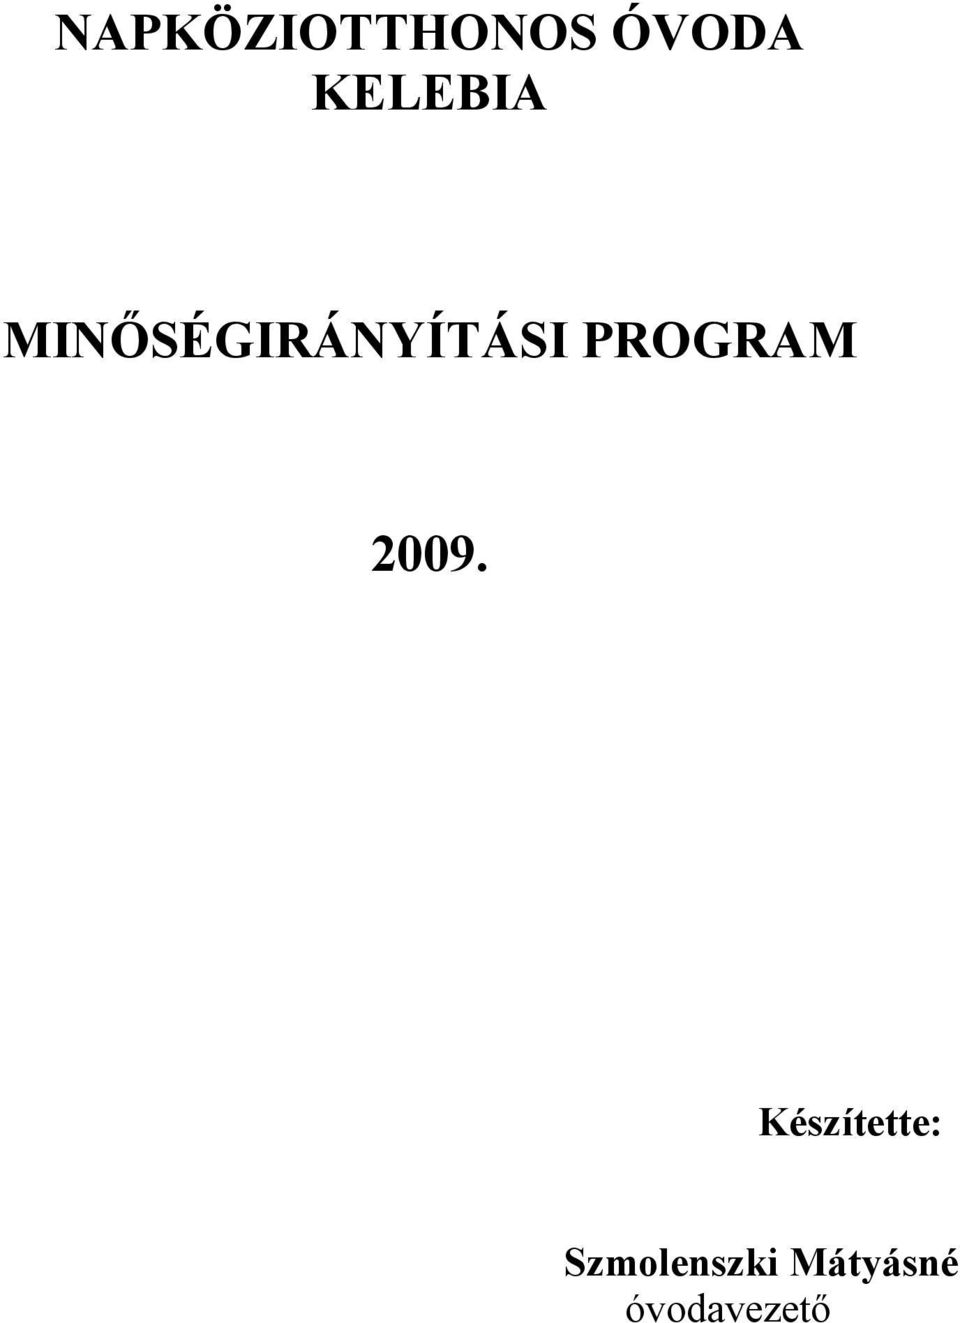 PROGRAM 2009.